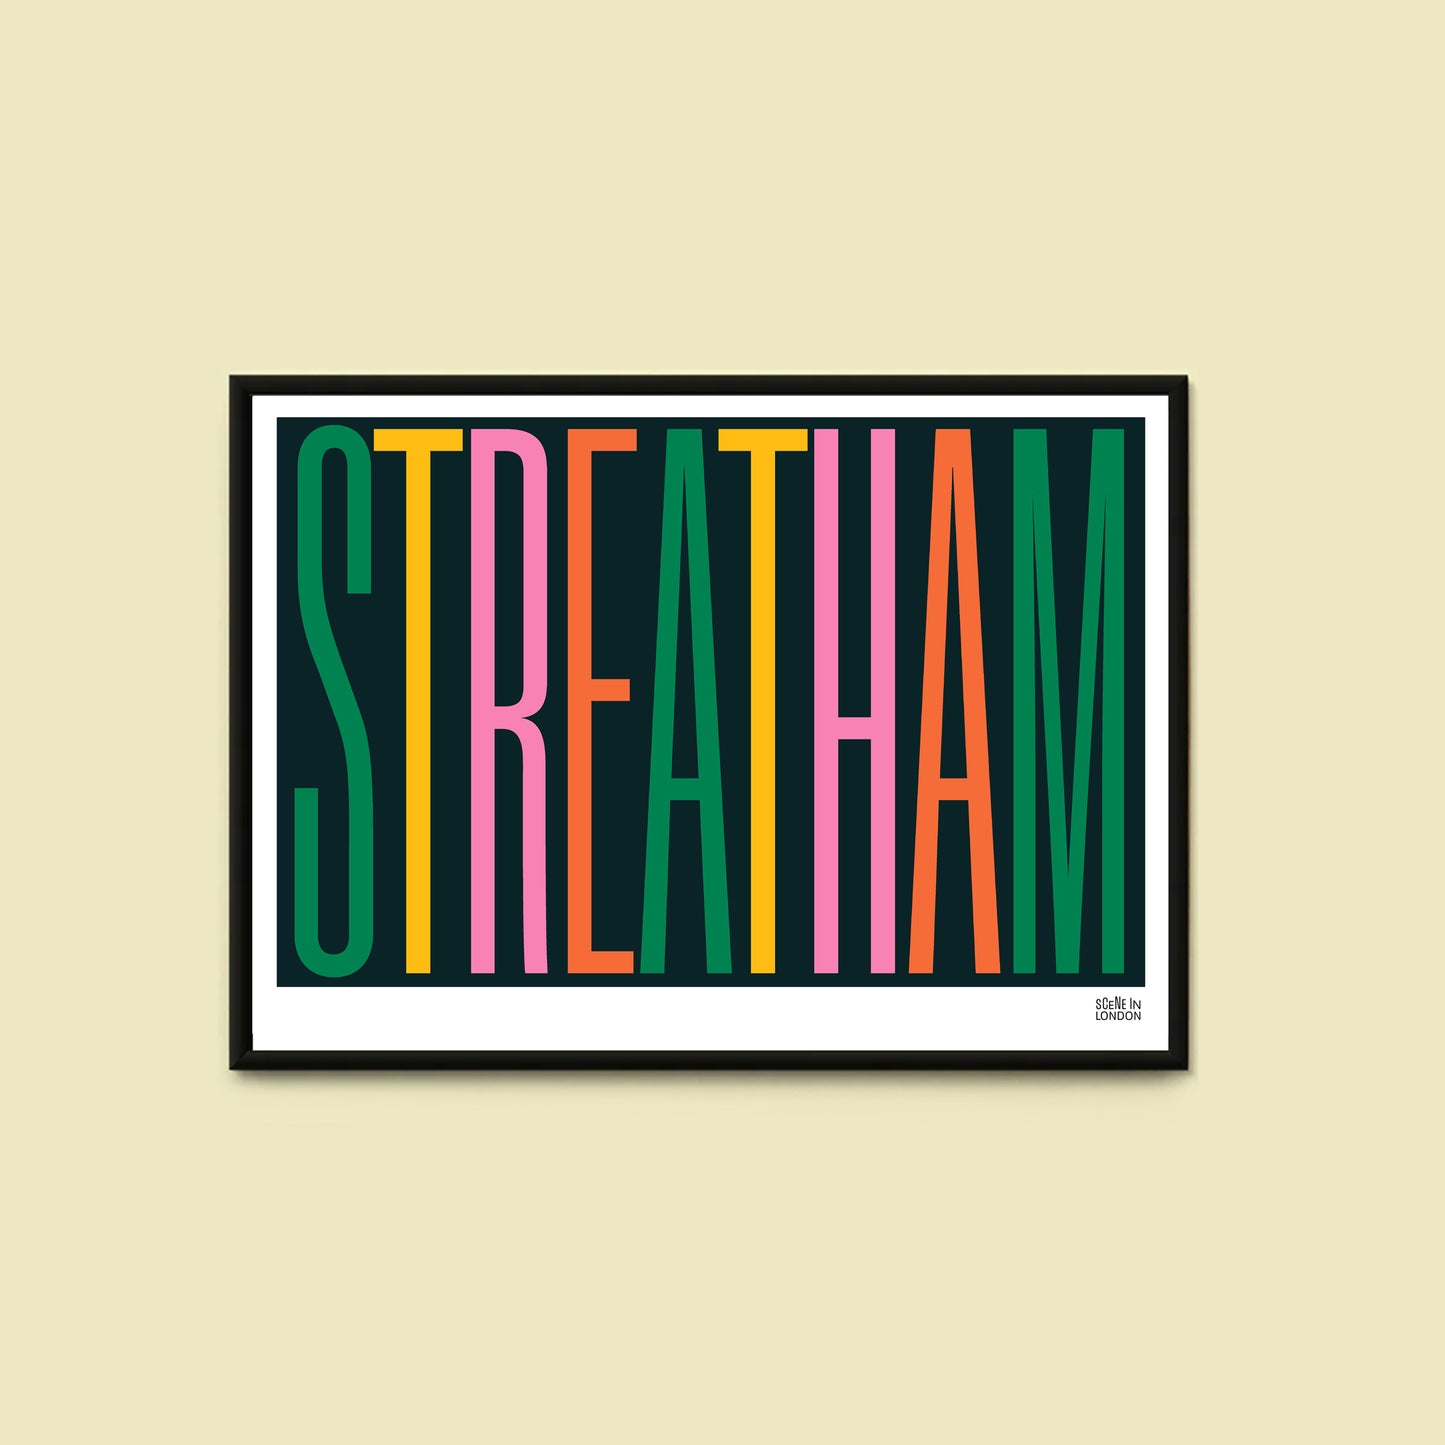 Streatham Typography Print